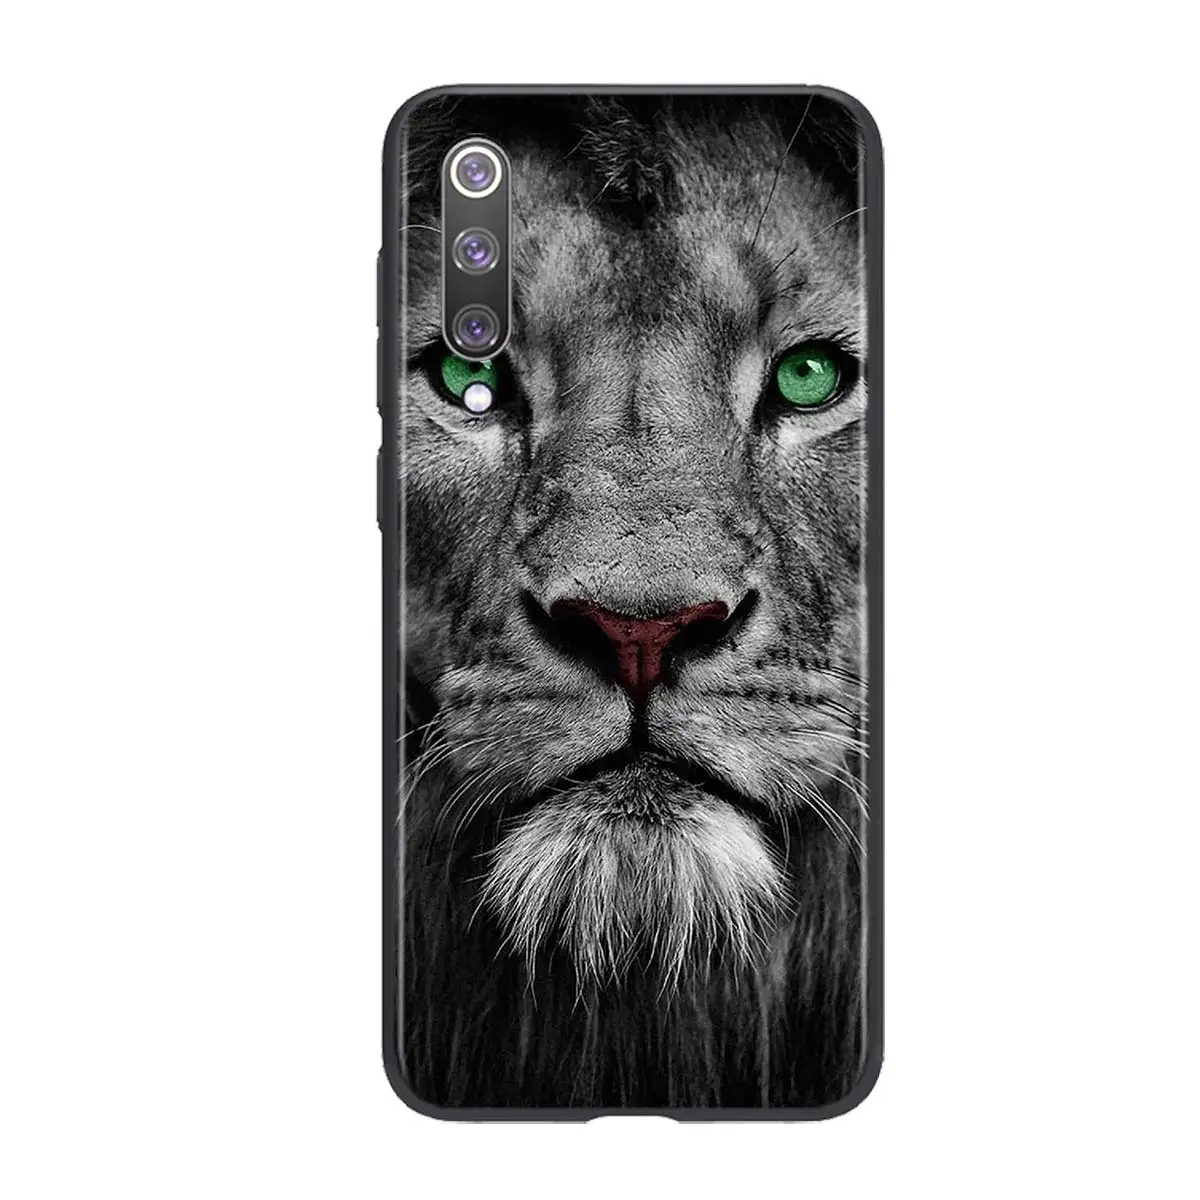 The Lion king animal For Xiaomi Mi 11 10T Note 10 Poco X3 NFC M2 X2 F2 C3 M3 Play Mix 3 A2 8 Lite Pro Phone Case best phone cases for xiaomi Cases For Xiaomi